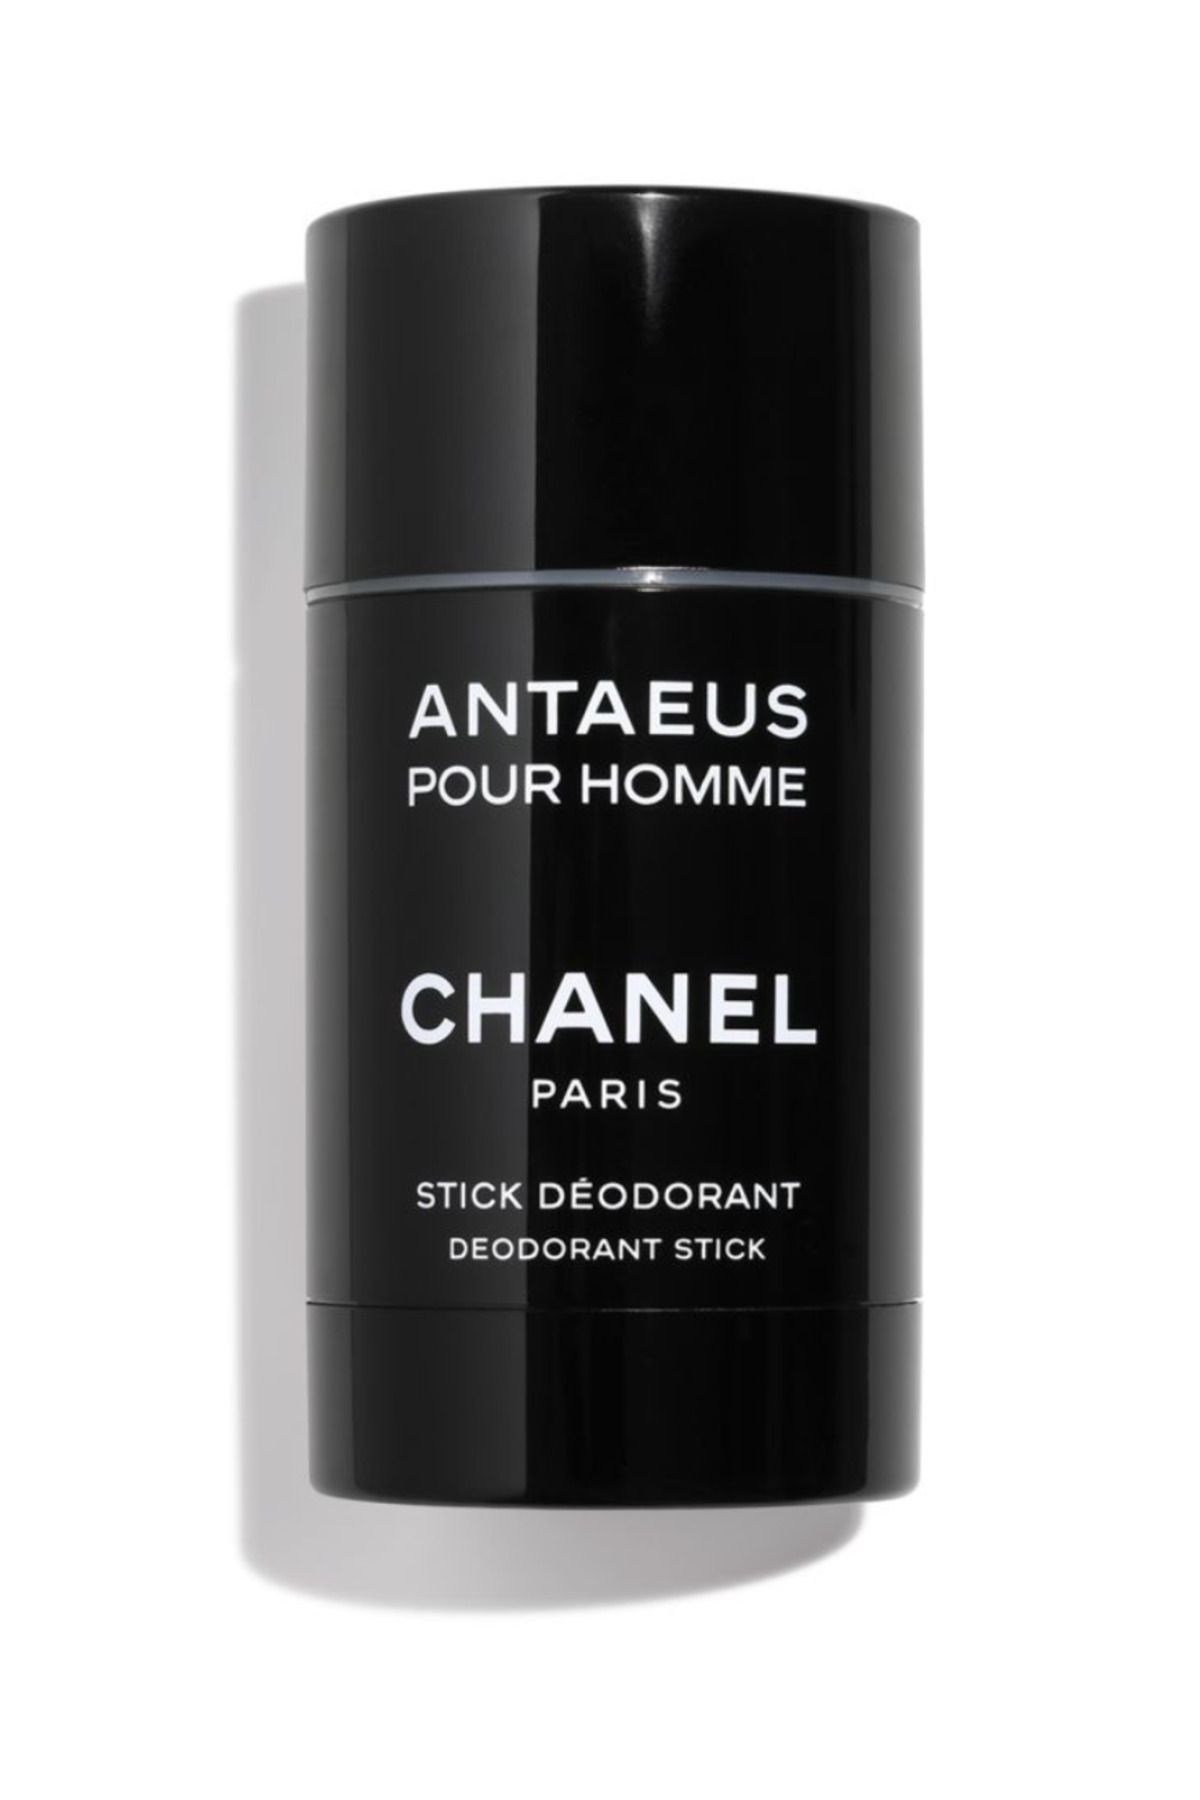 Chanel دئودورانت استیکی Antaeus رایحه چرمی و معطر قوی و جذاب